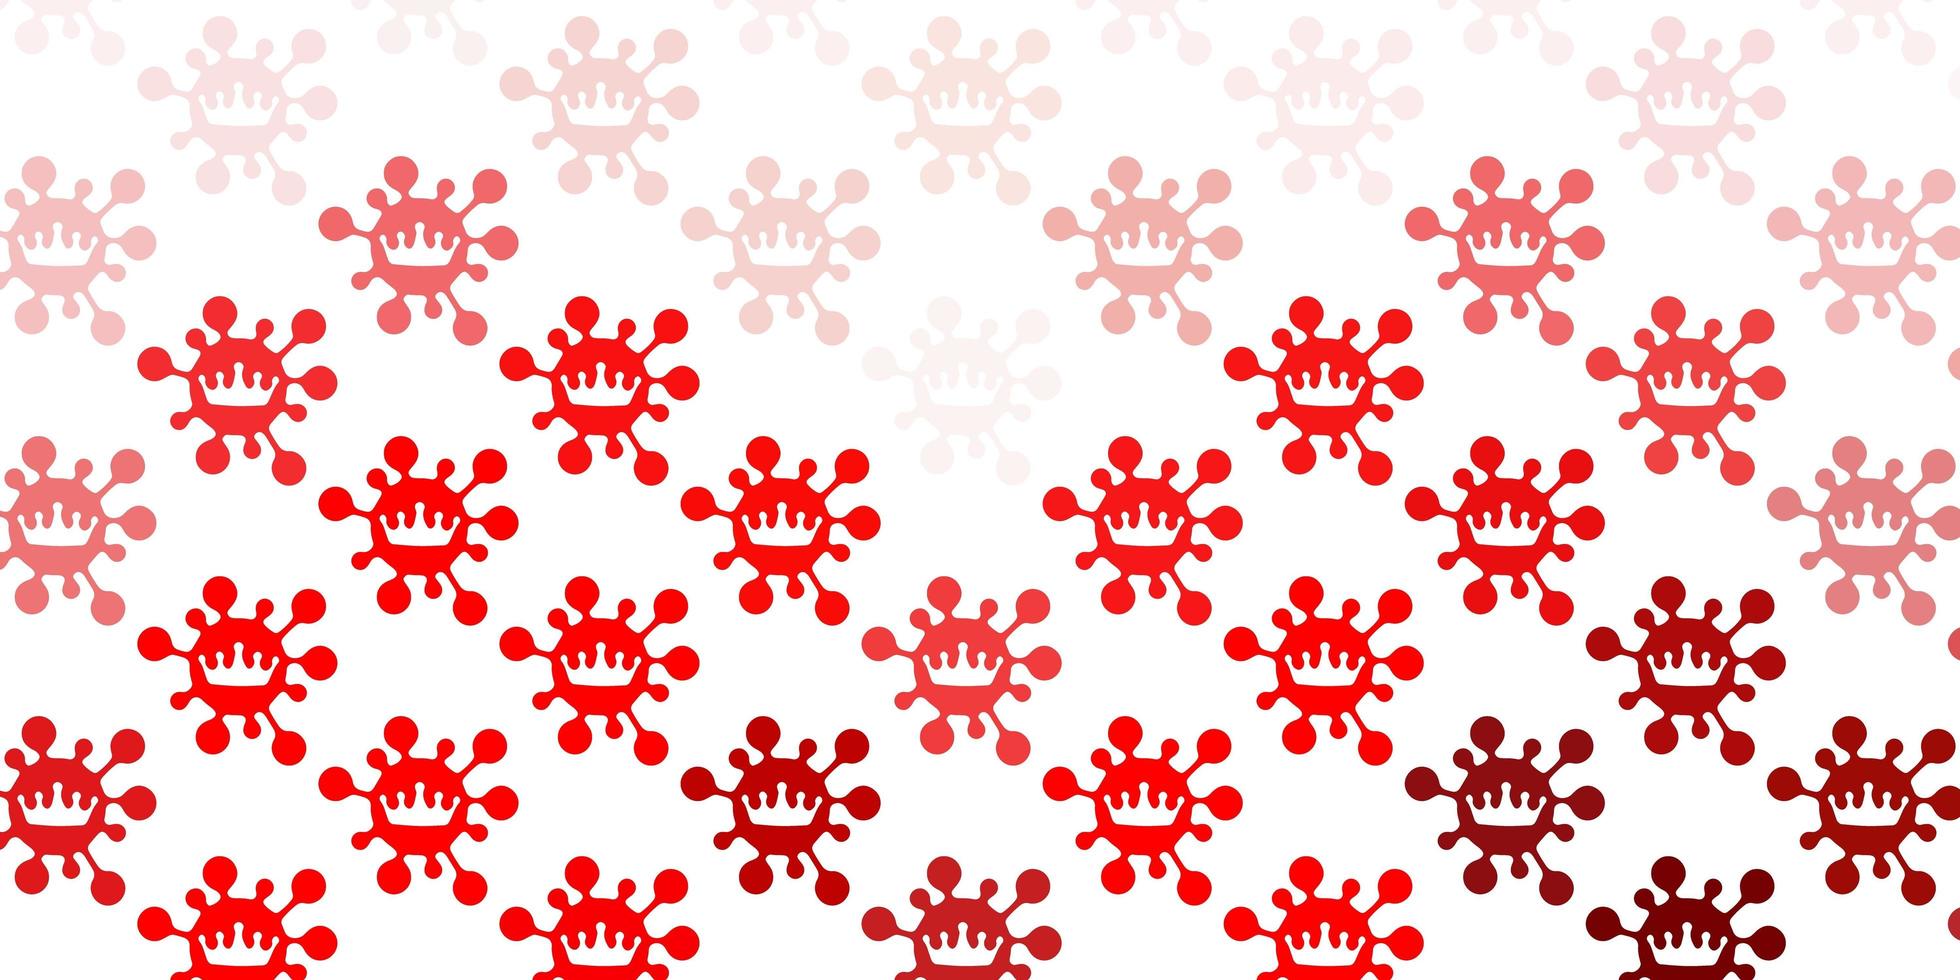 telón de fondo rojo claro con símbolos de virus. vector